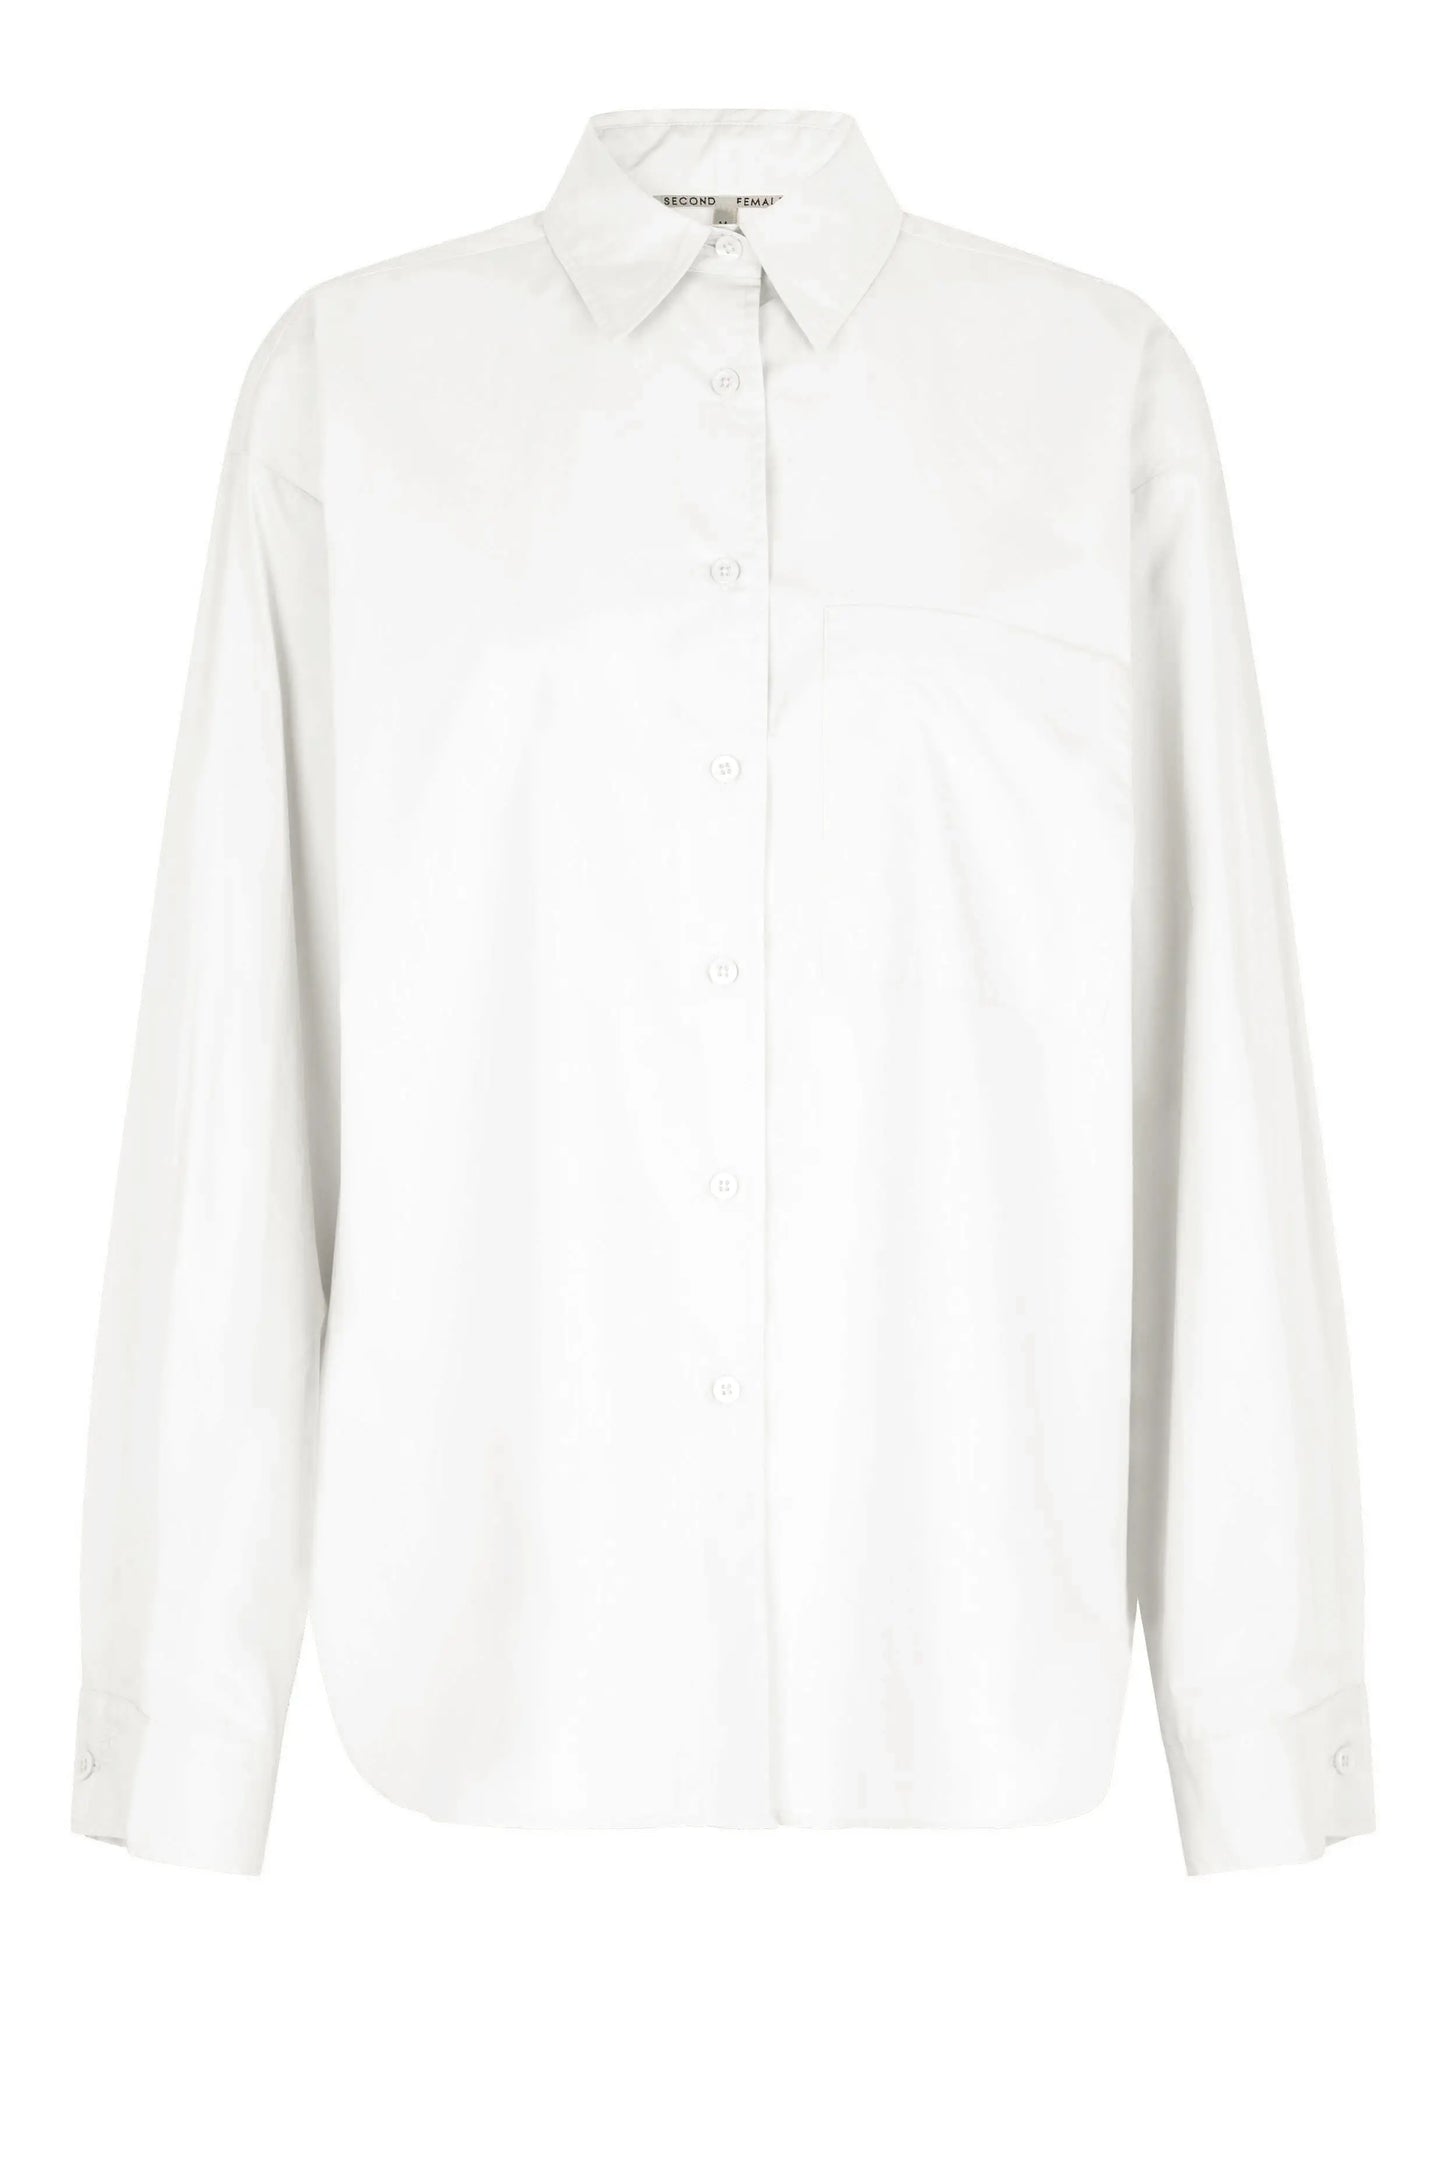 Alulin New Shirt White